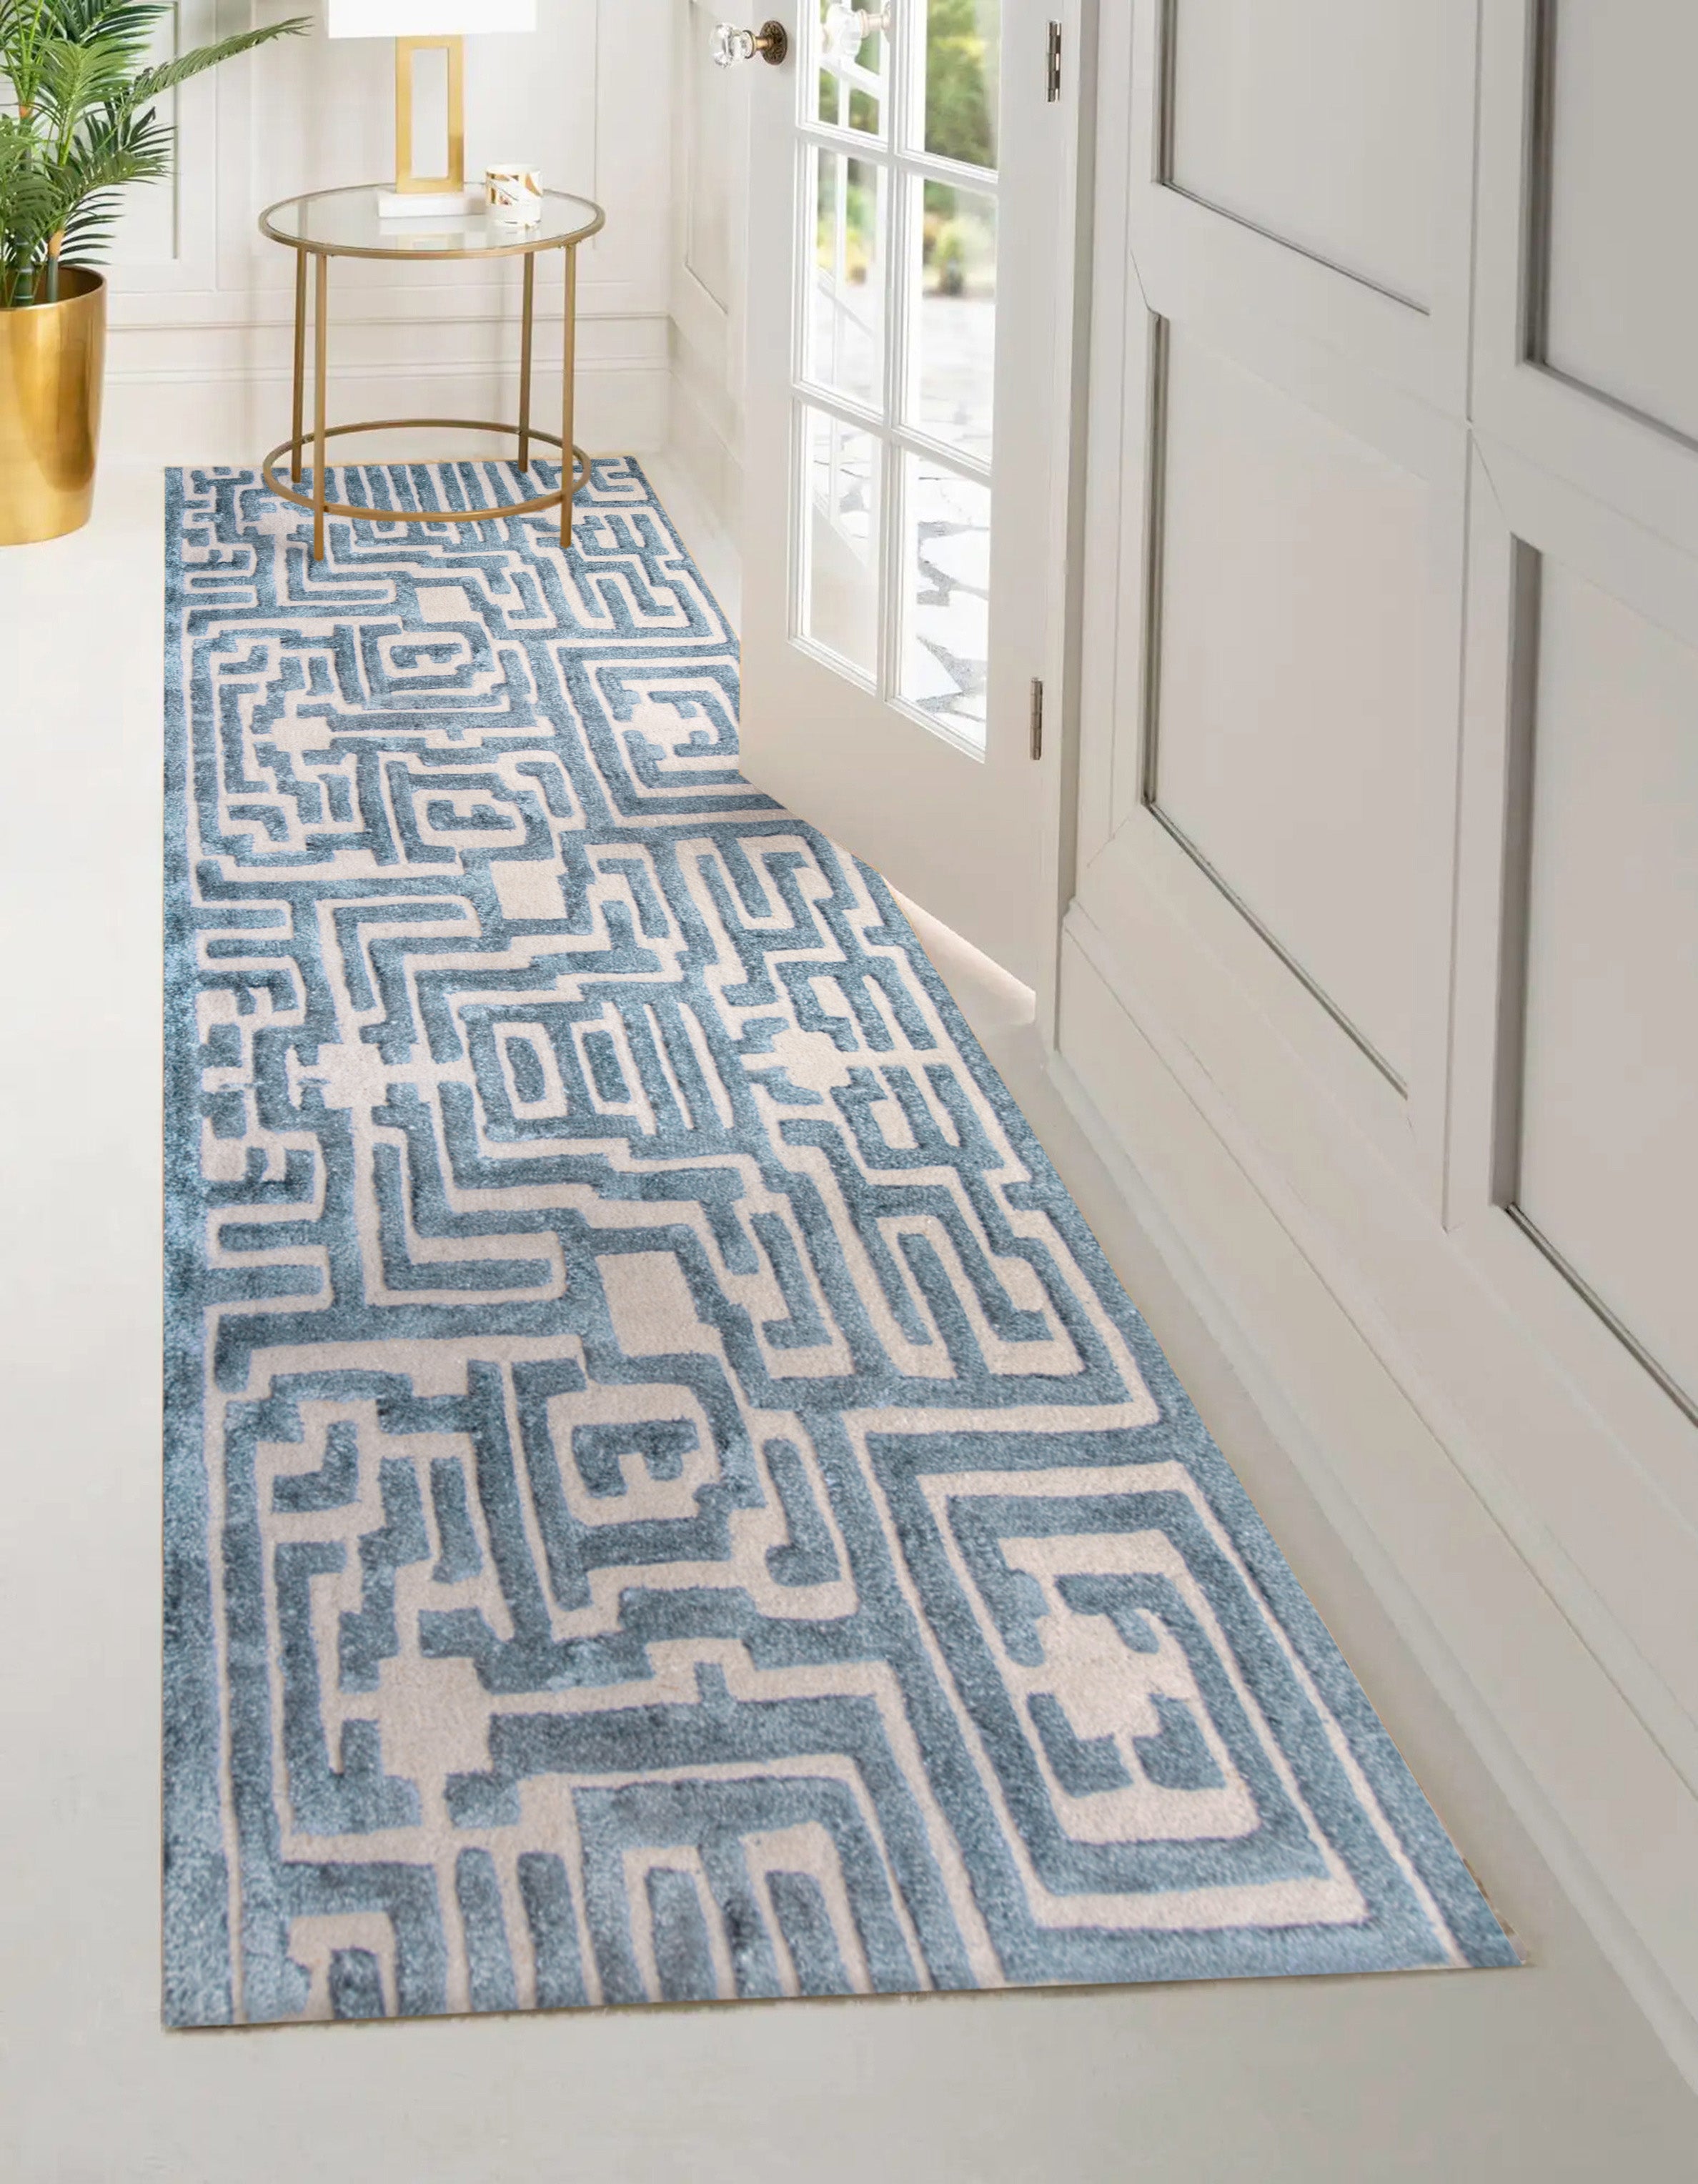 Theseus Hand-Tufted Maze Rug by Kevin Francis Design | Atlanta Interior Designer | Luxury Home Decor